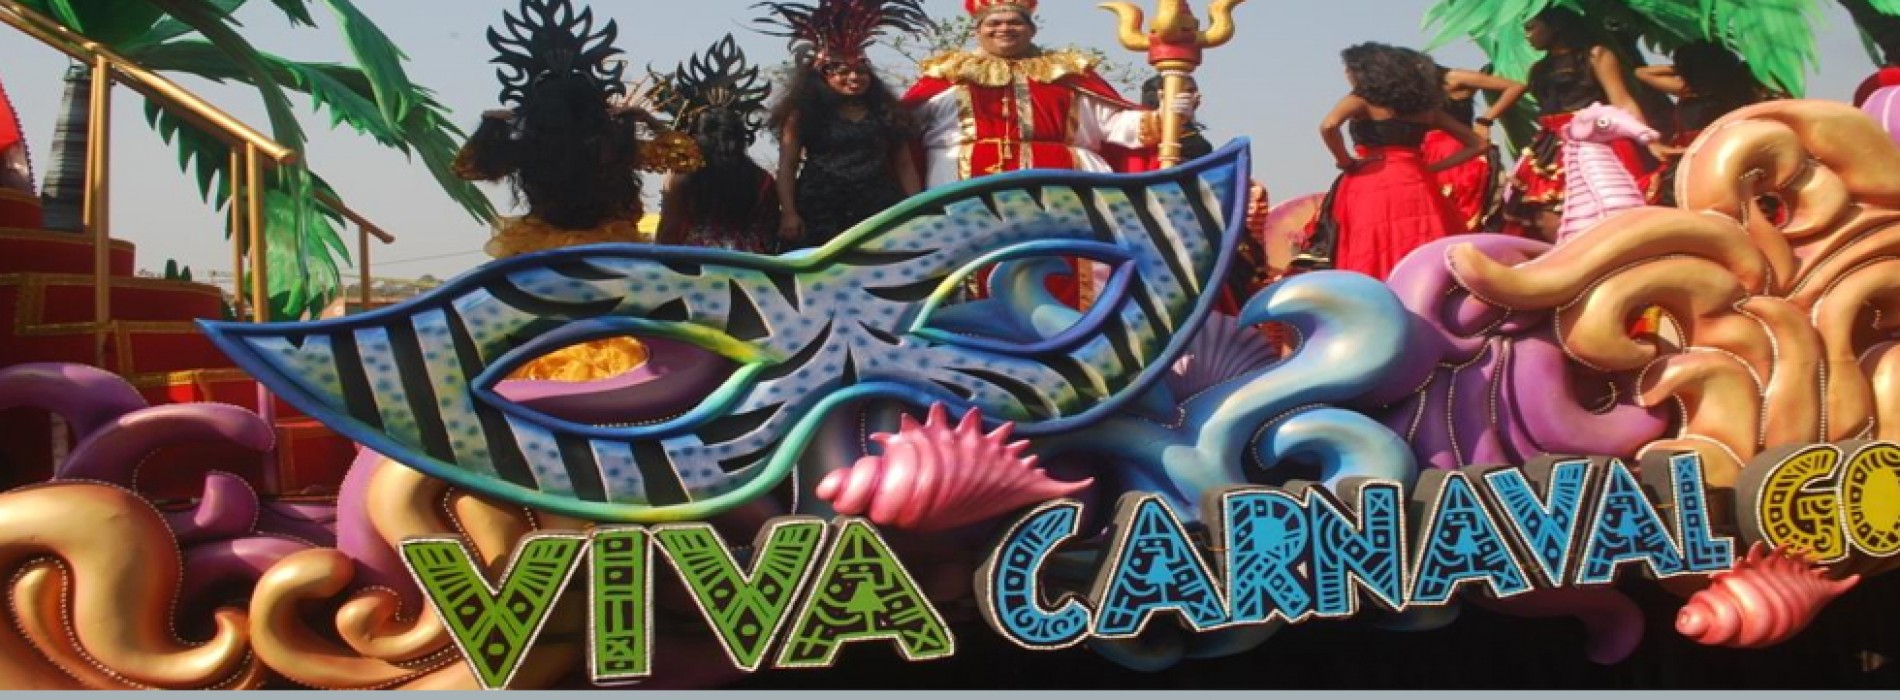 Goa Carnival 2017 from February 25-28